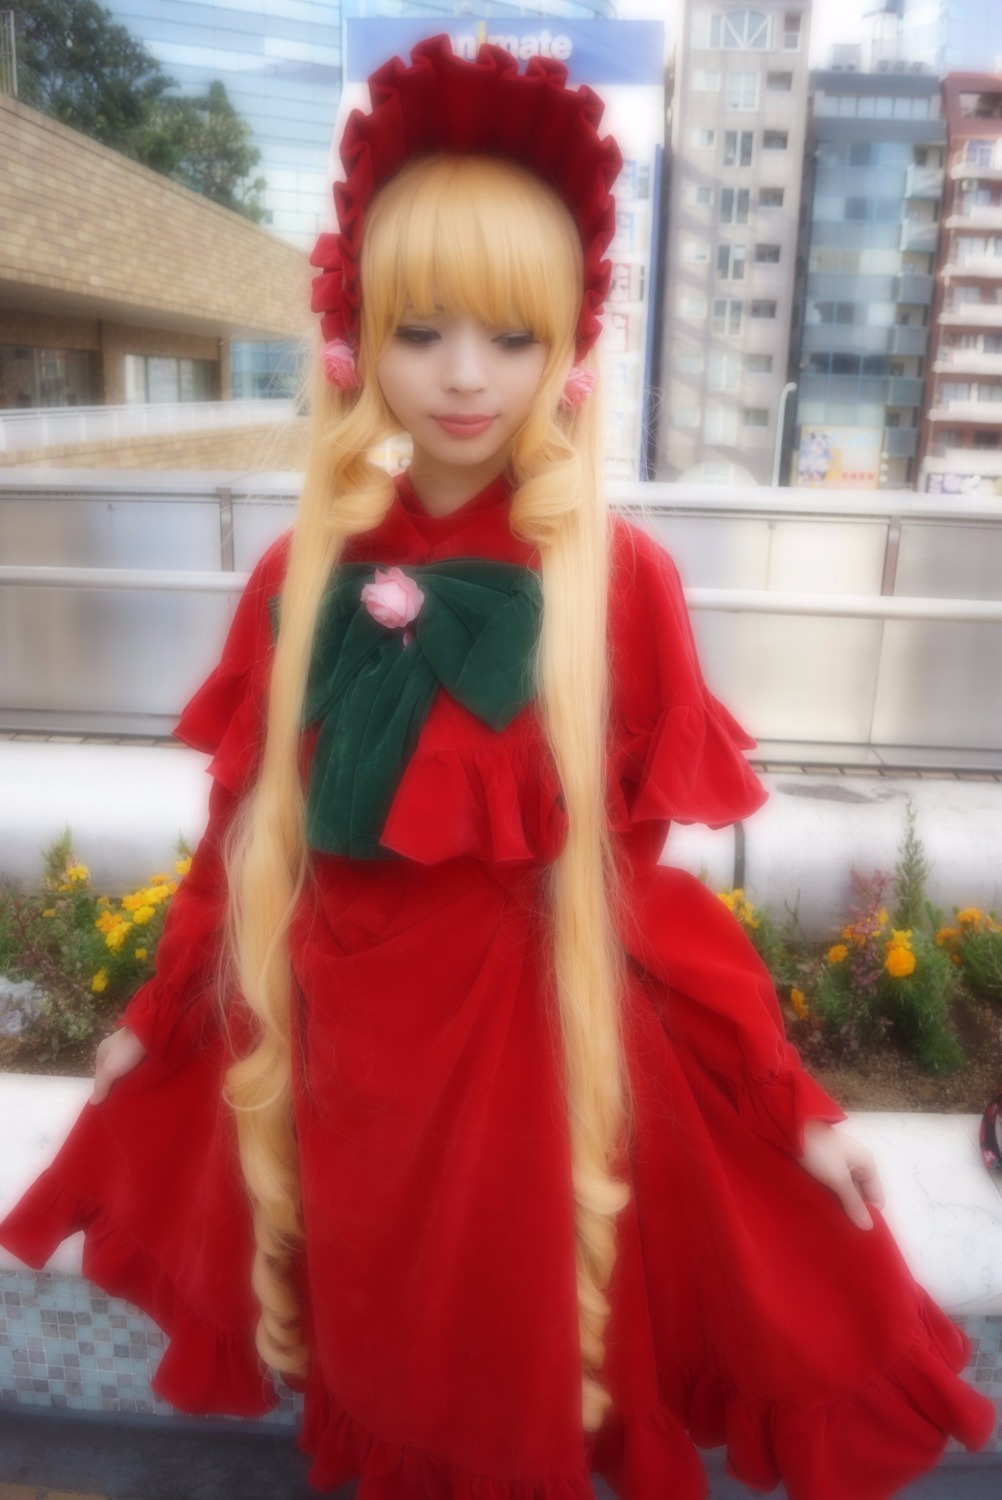 1girl blonde_hair blurry bonnet building day dress flower long_hair long_sleeves outdoors red_dress shinku solo standing